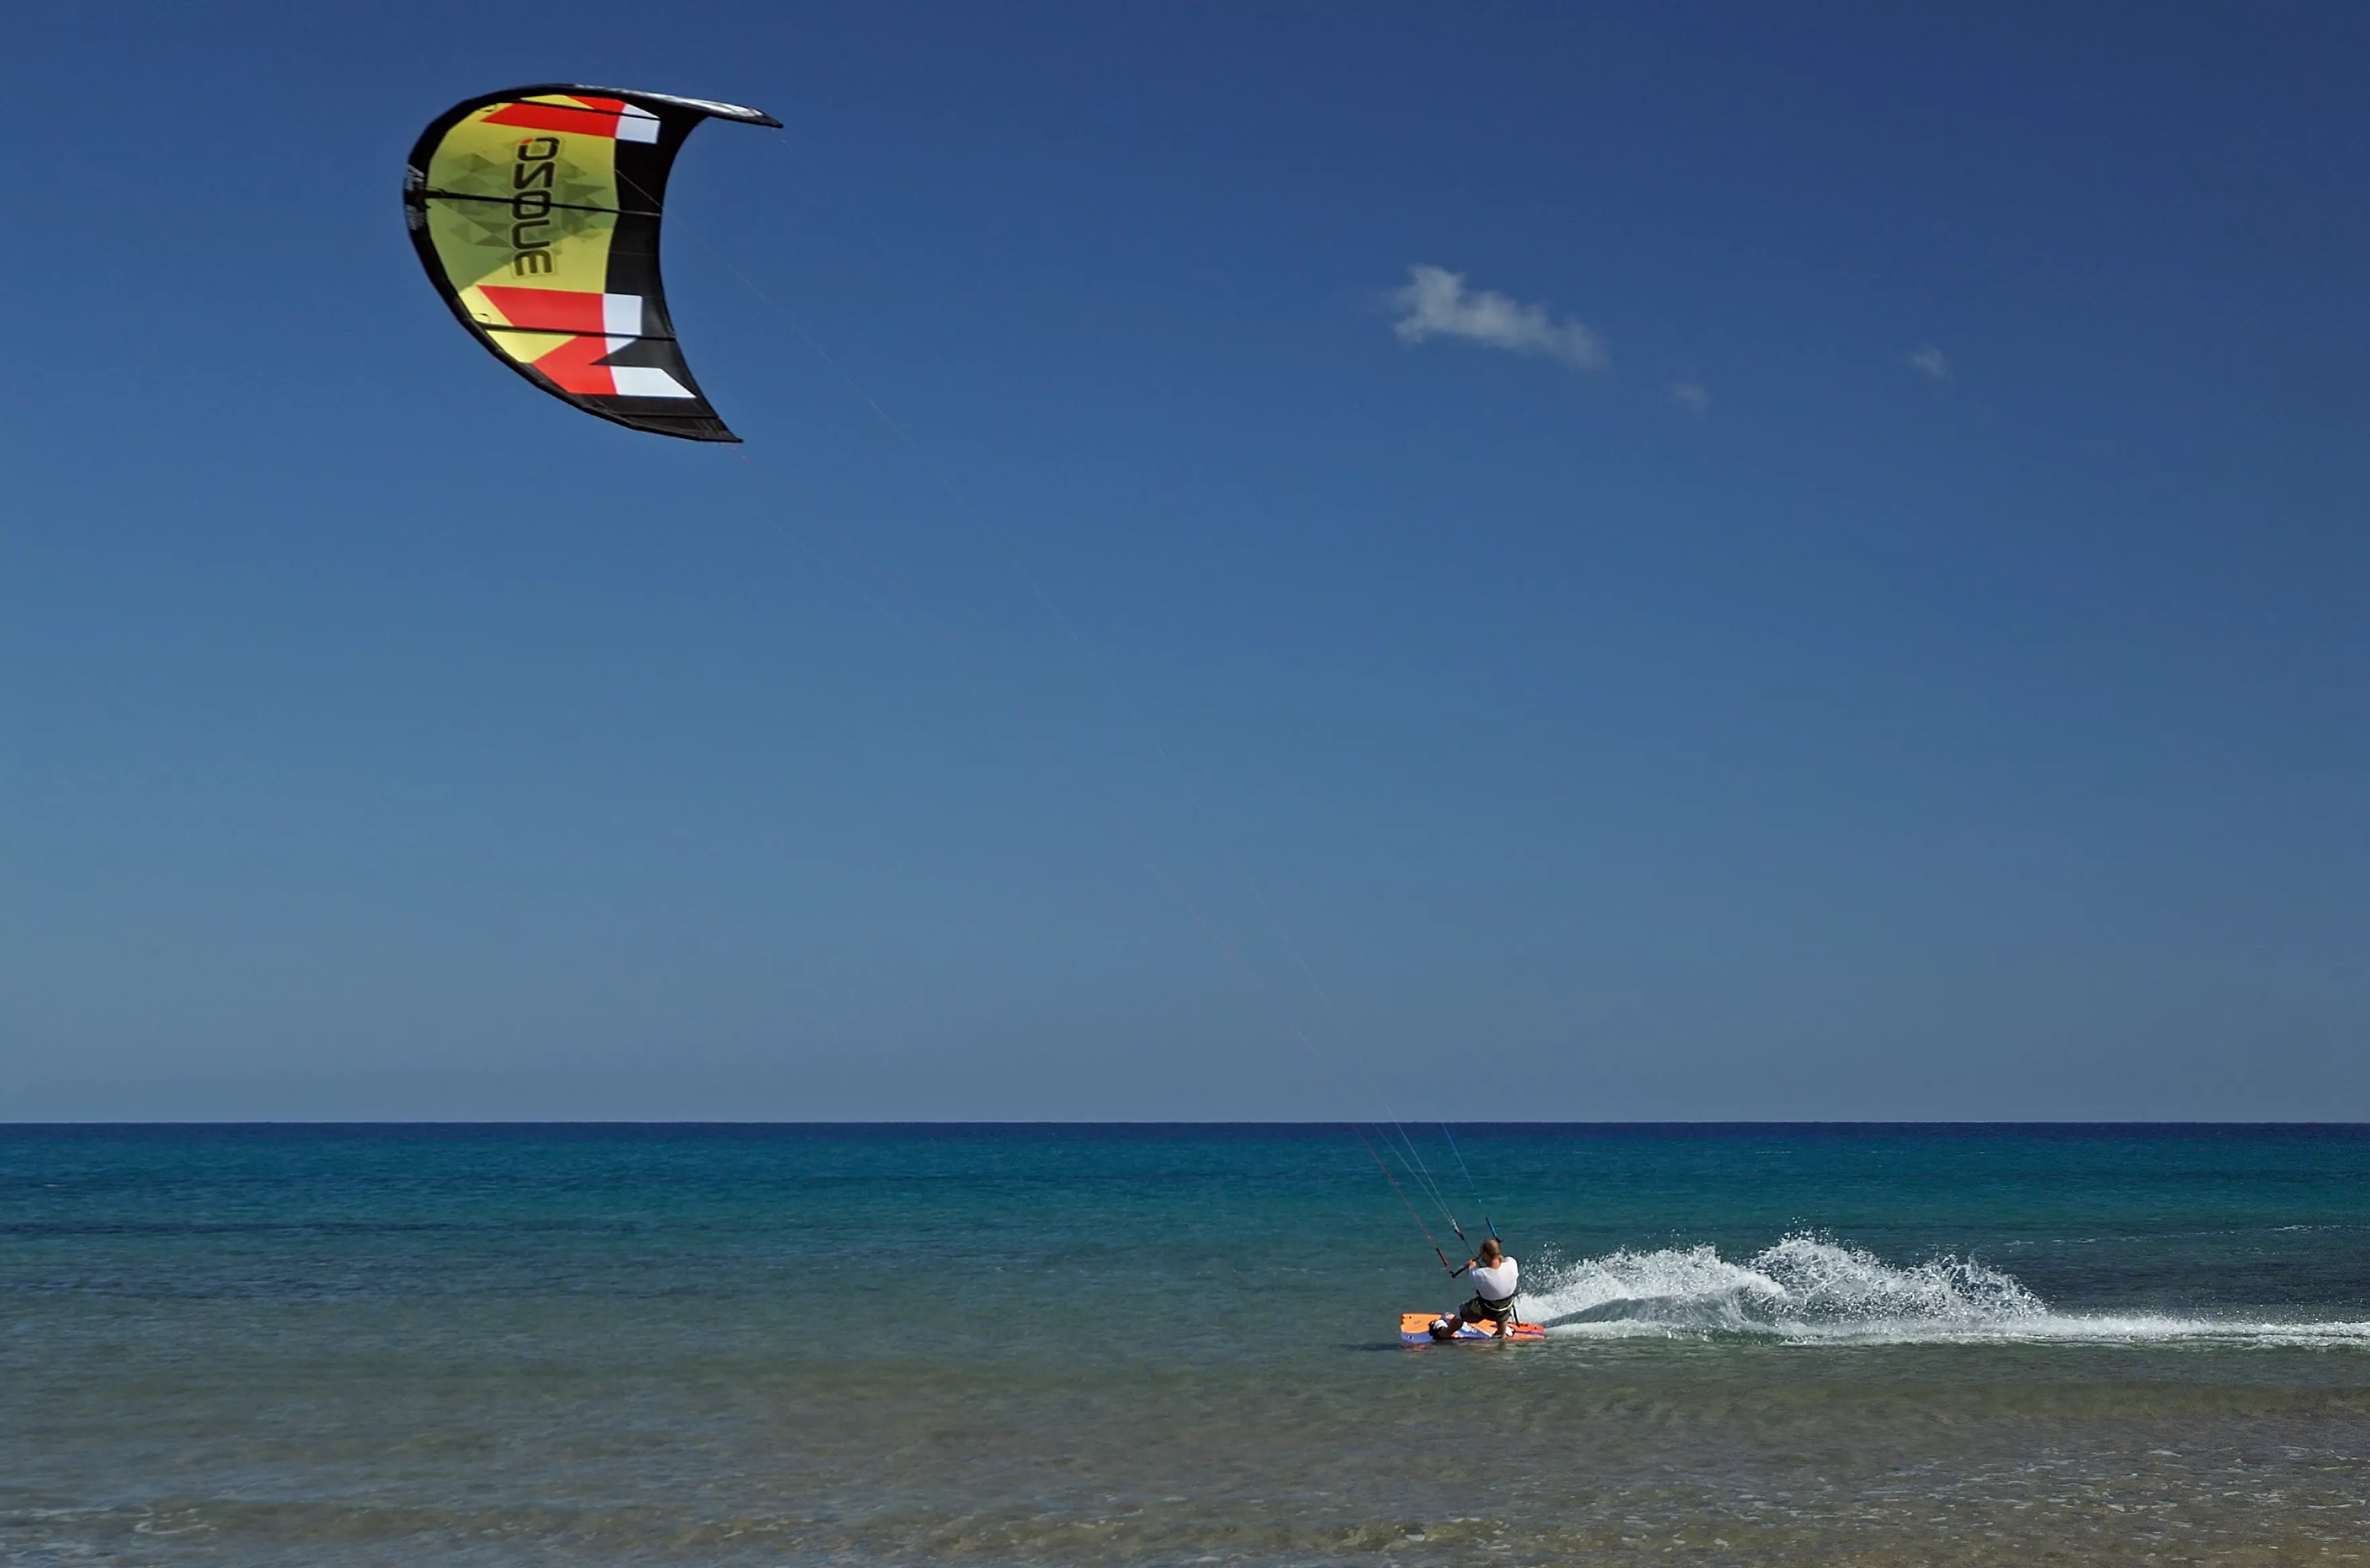 Bull Kite School in Spain, Europe | Kitesurfing - Rated 1.7